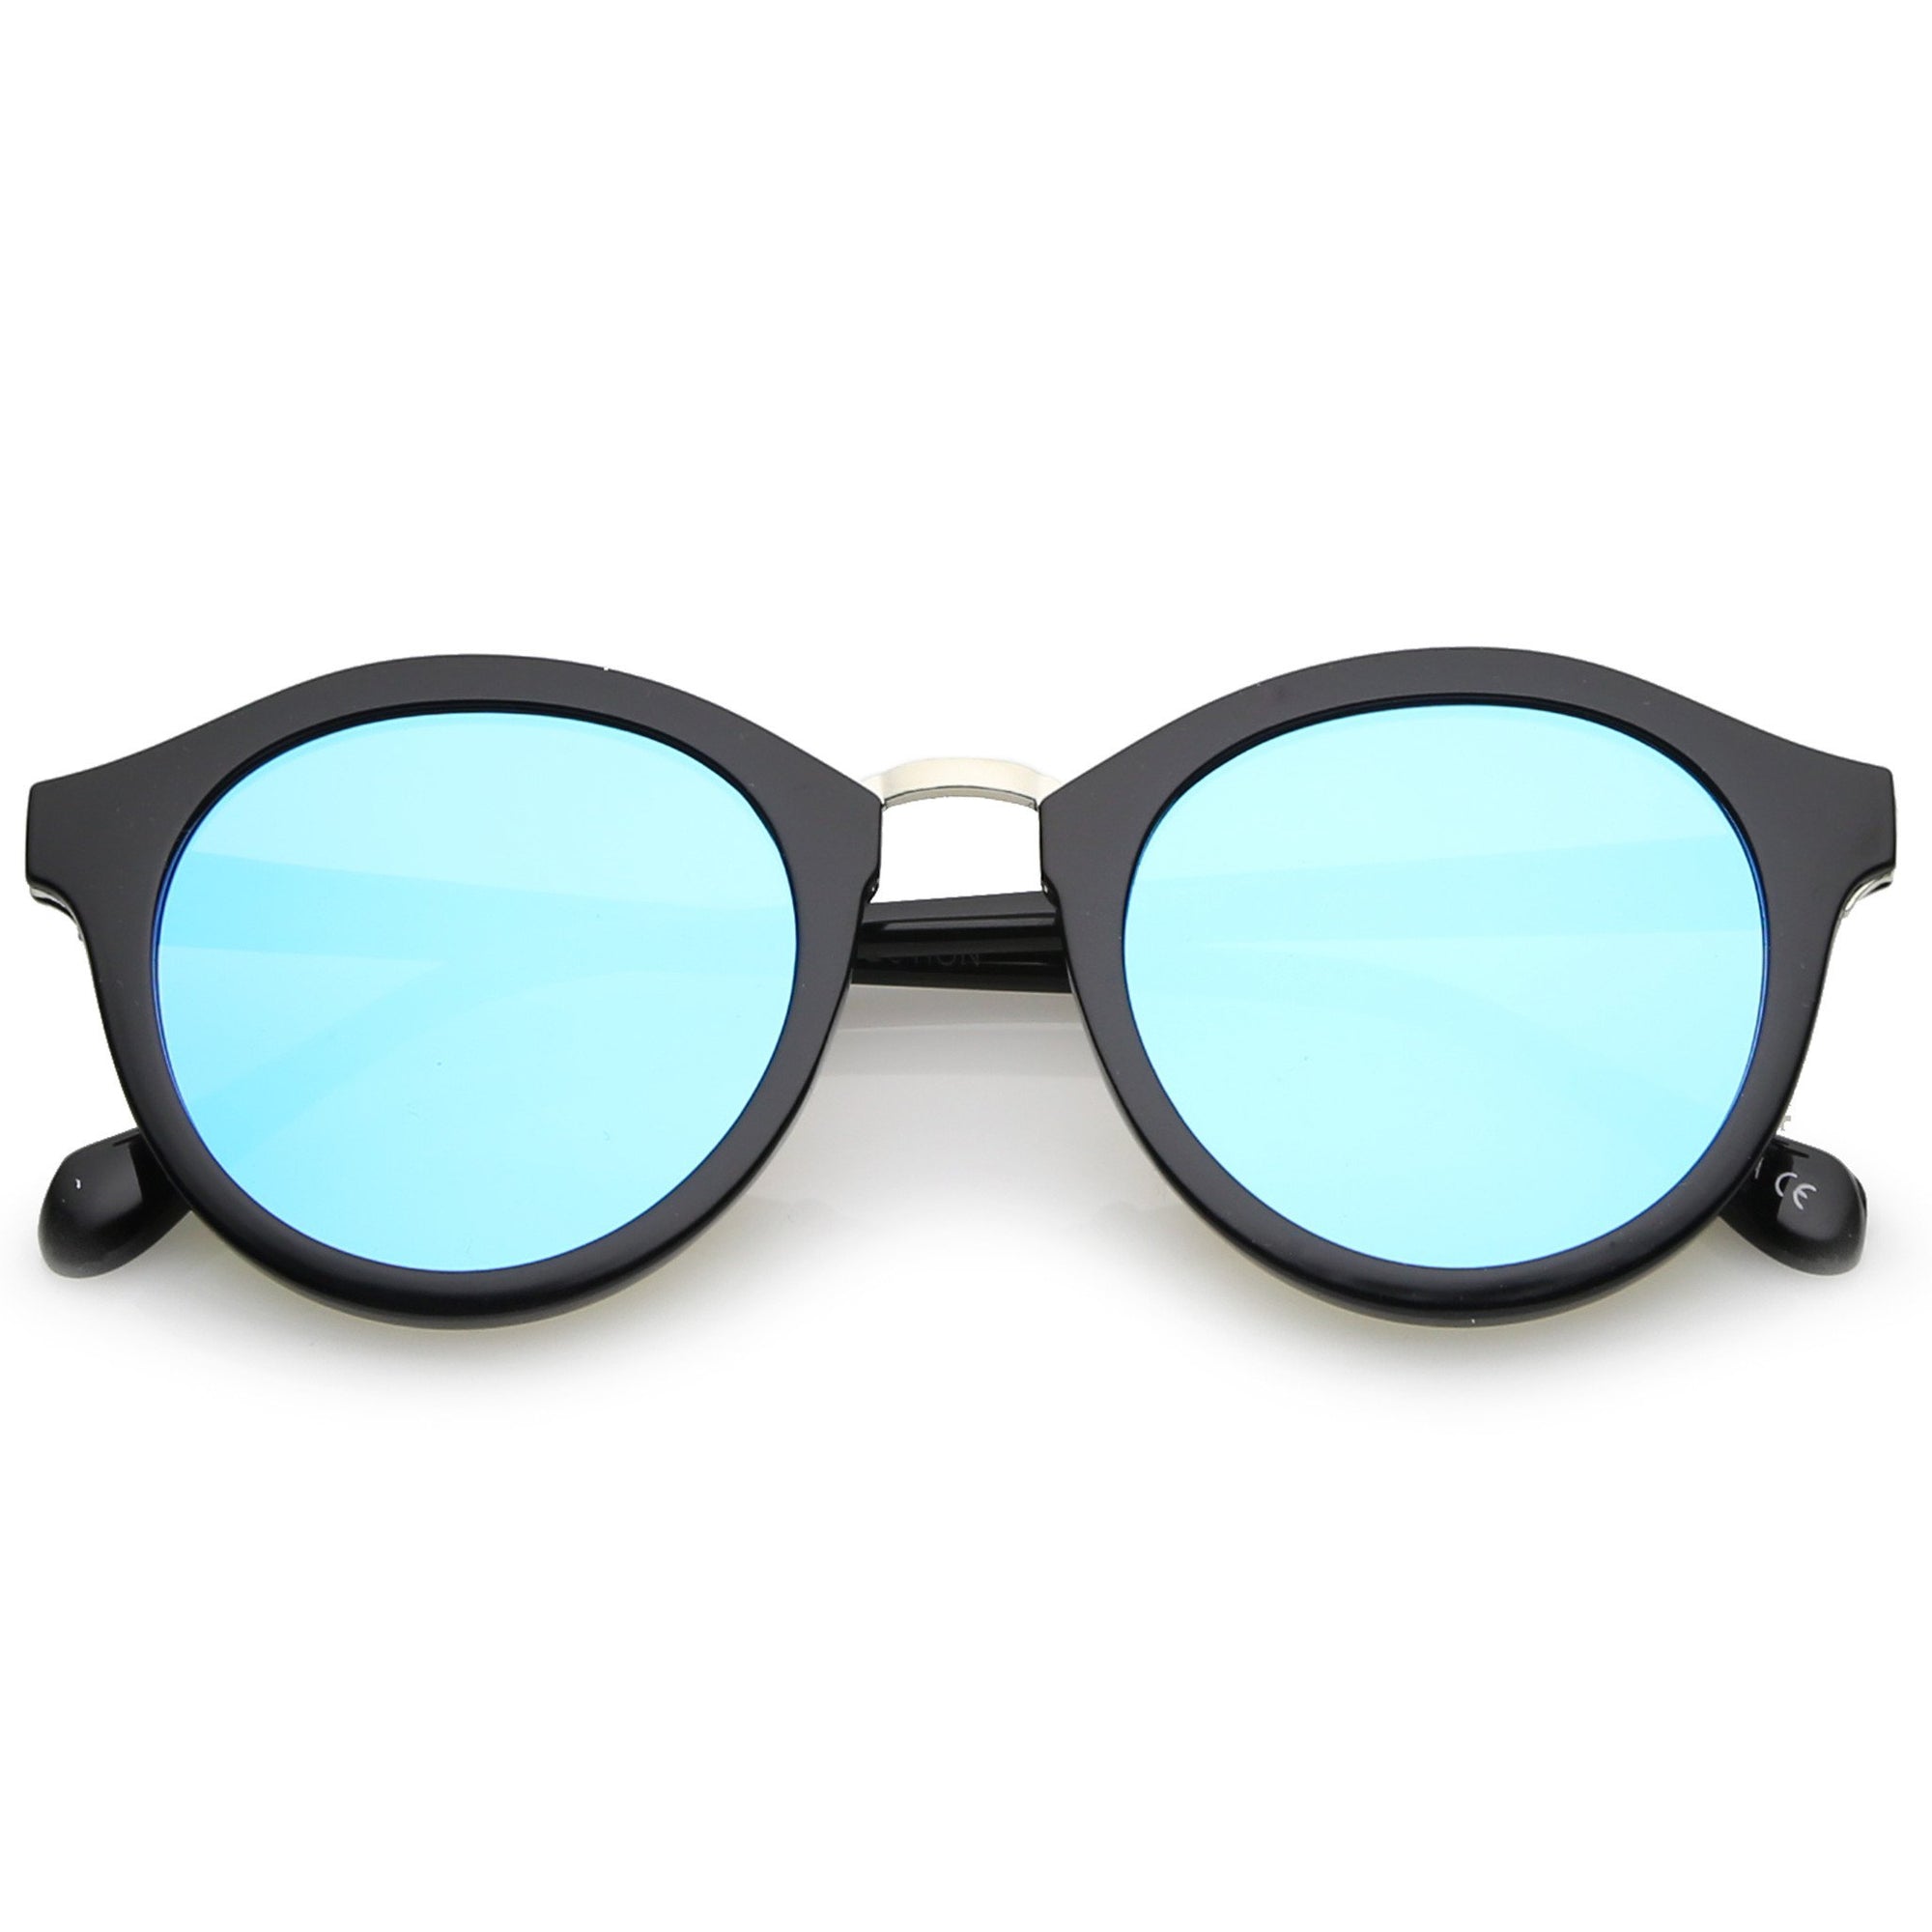 Retro Modern Horned Rim Flat Mirrored Lens Sunglasses - zeroUV